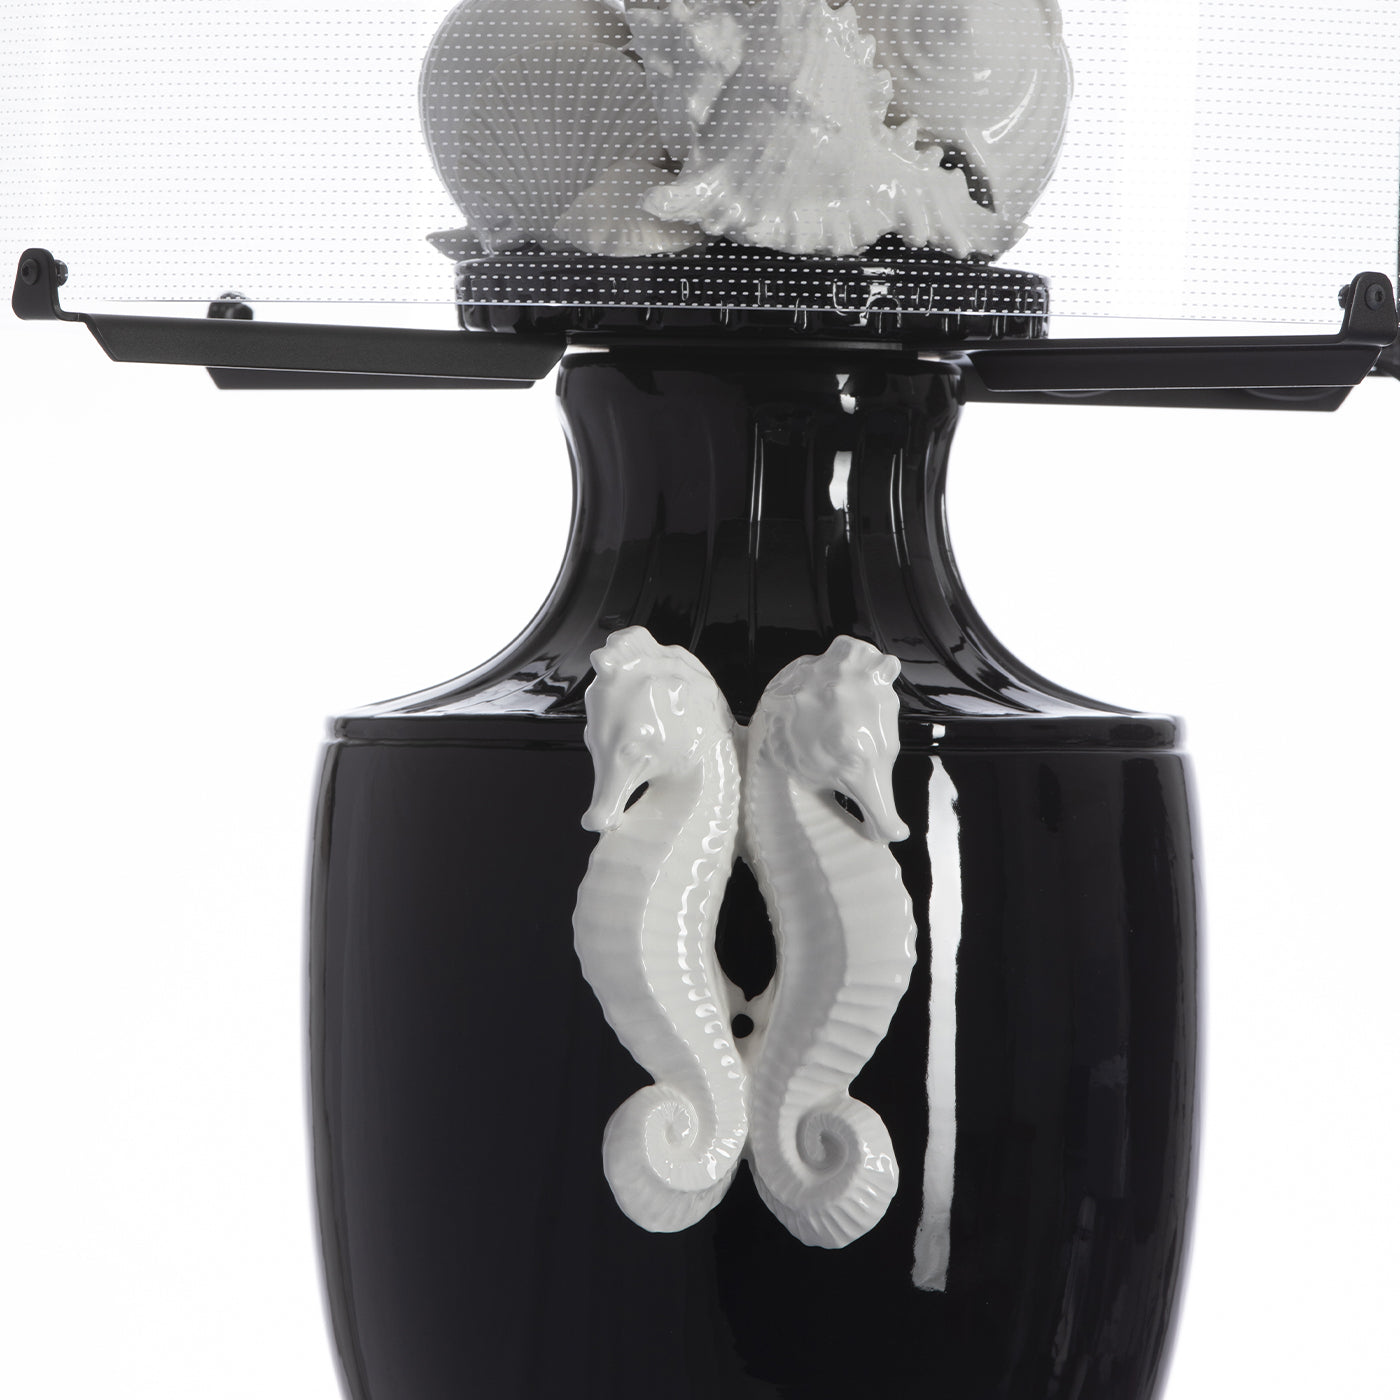 Okeanos Black and White Decòr Table Lamp  - Alternative view 2